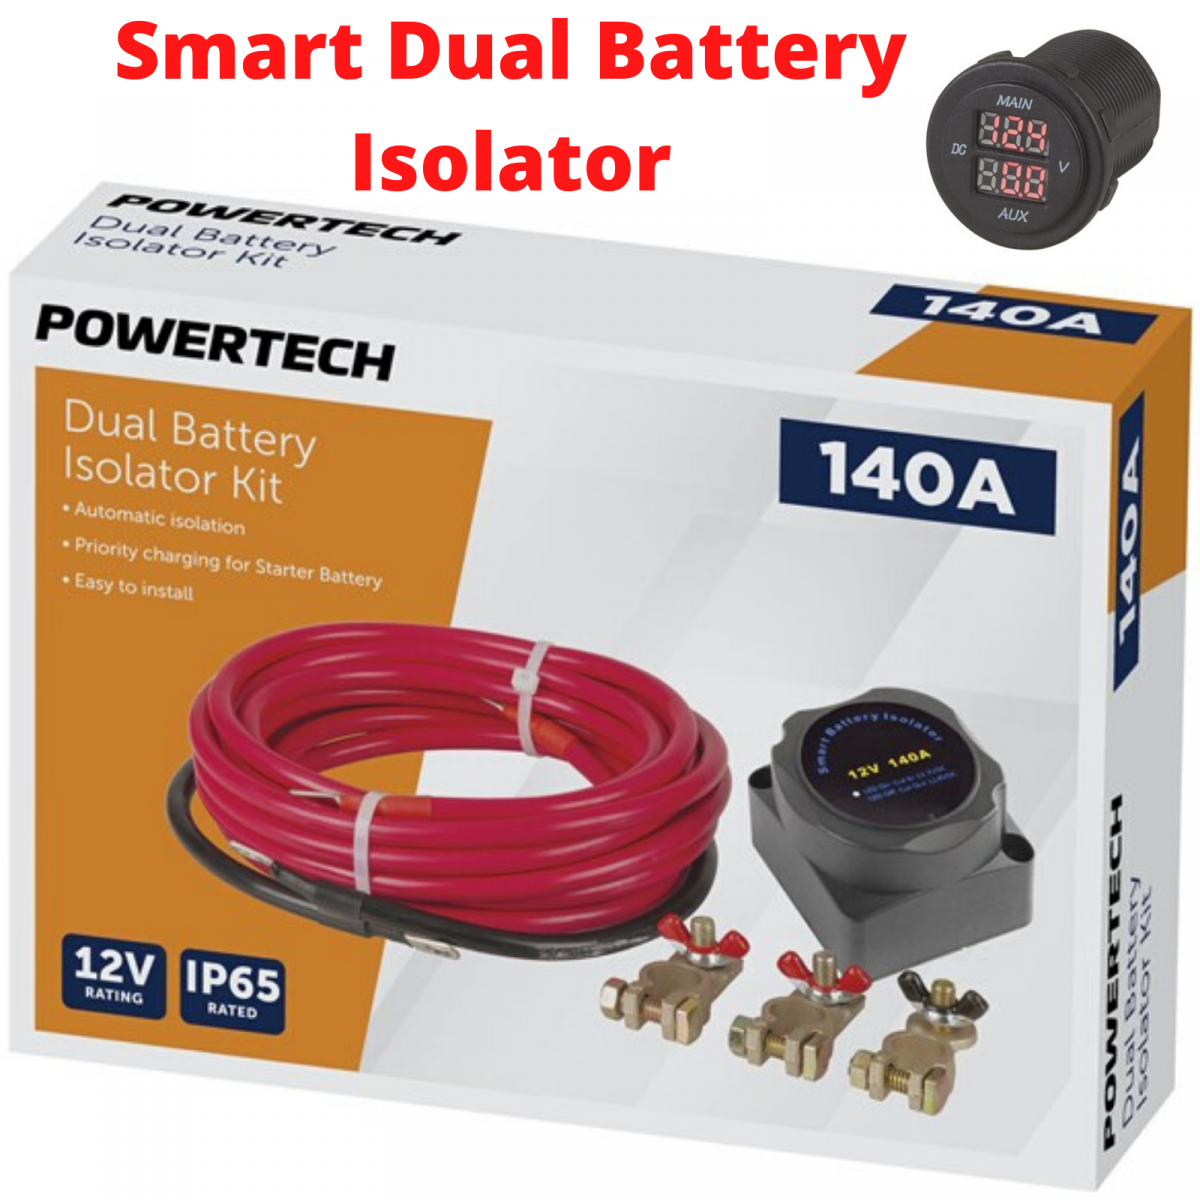 smart dual battery isolator